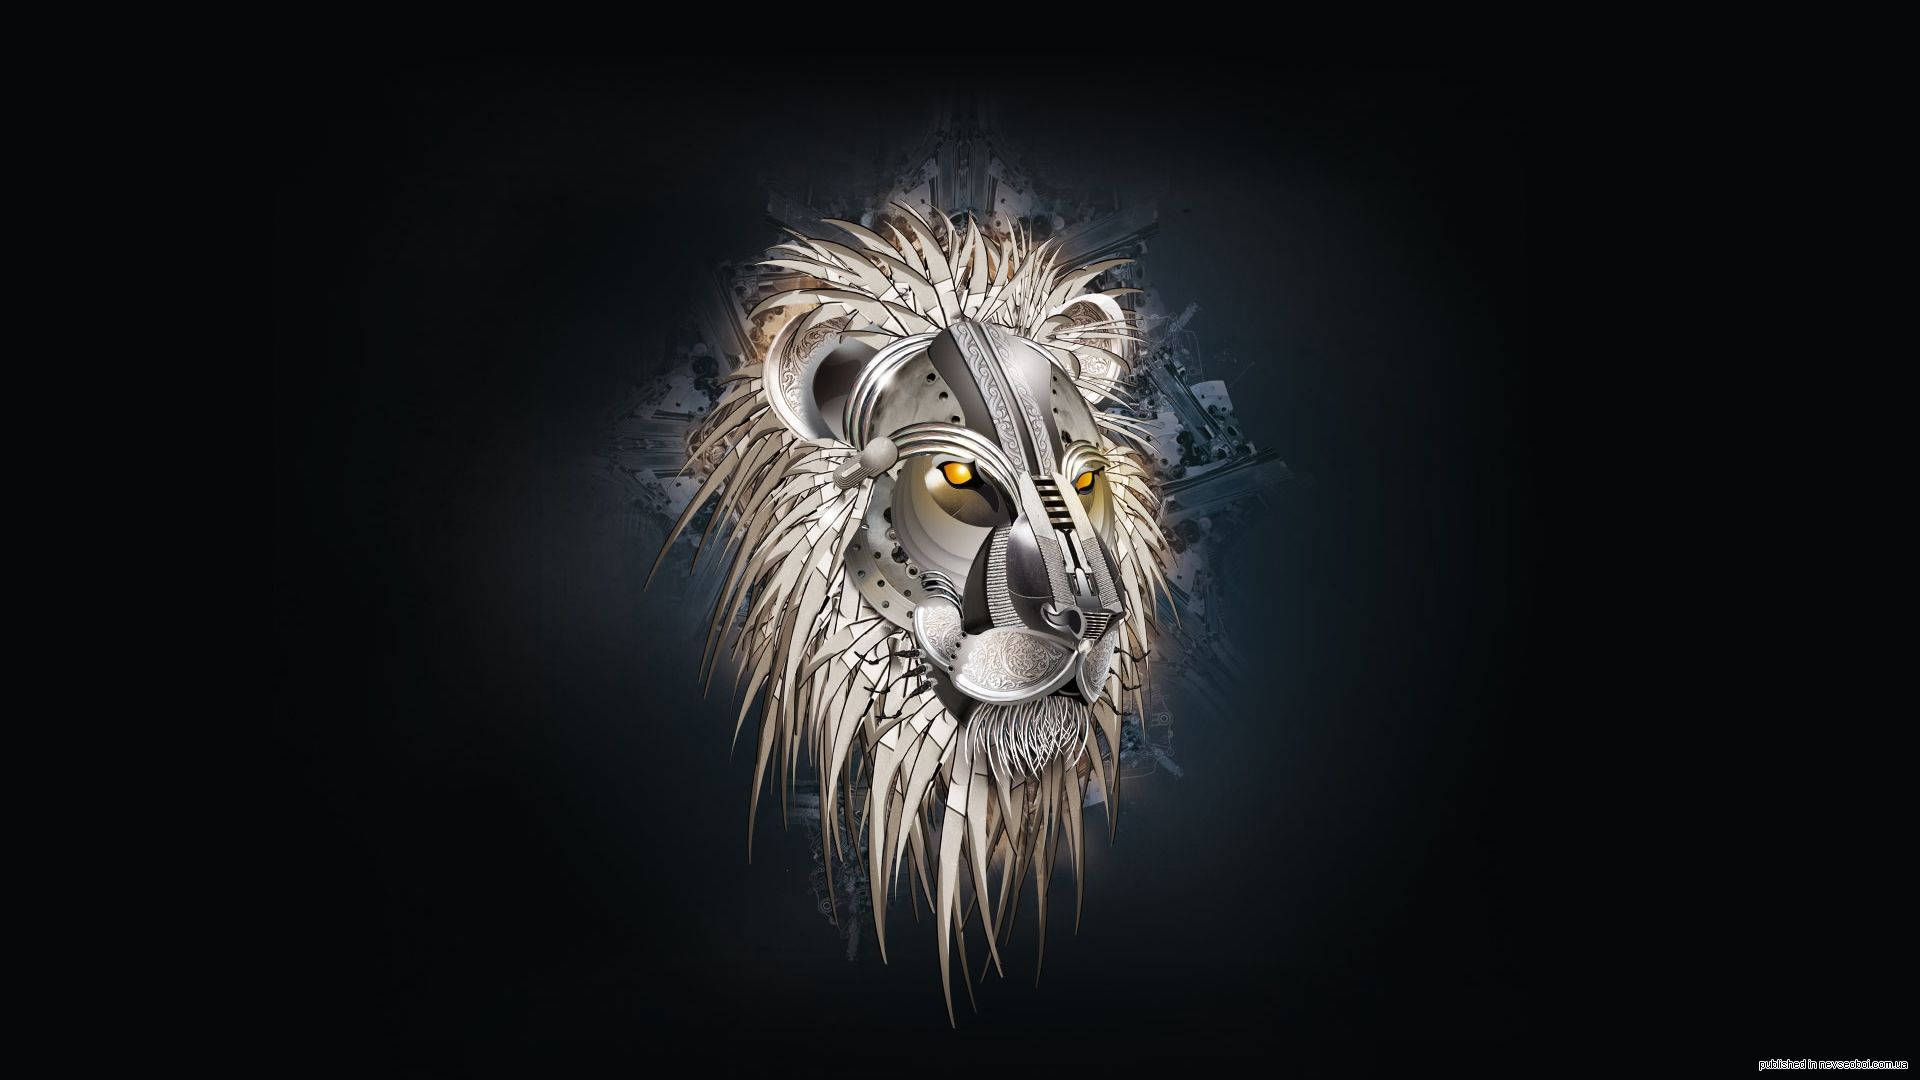 Beautiful Gaming Lion Background Wallpaper. Lion wallpaper, Lion HD wallpaper, Abstract lion